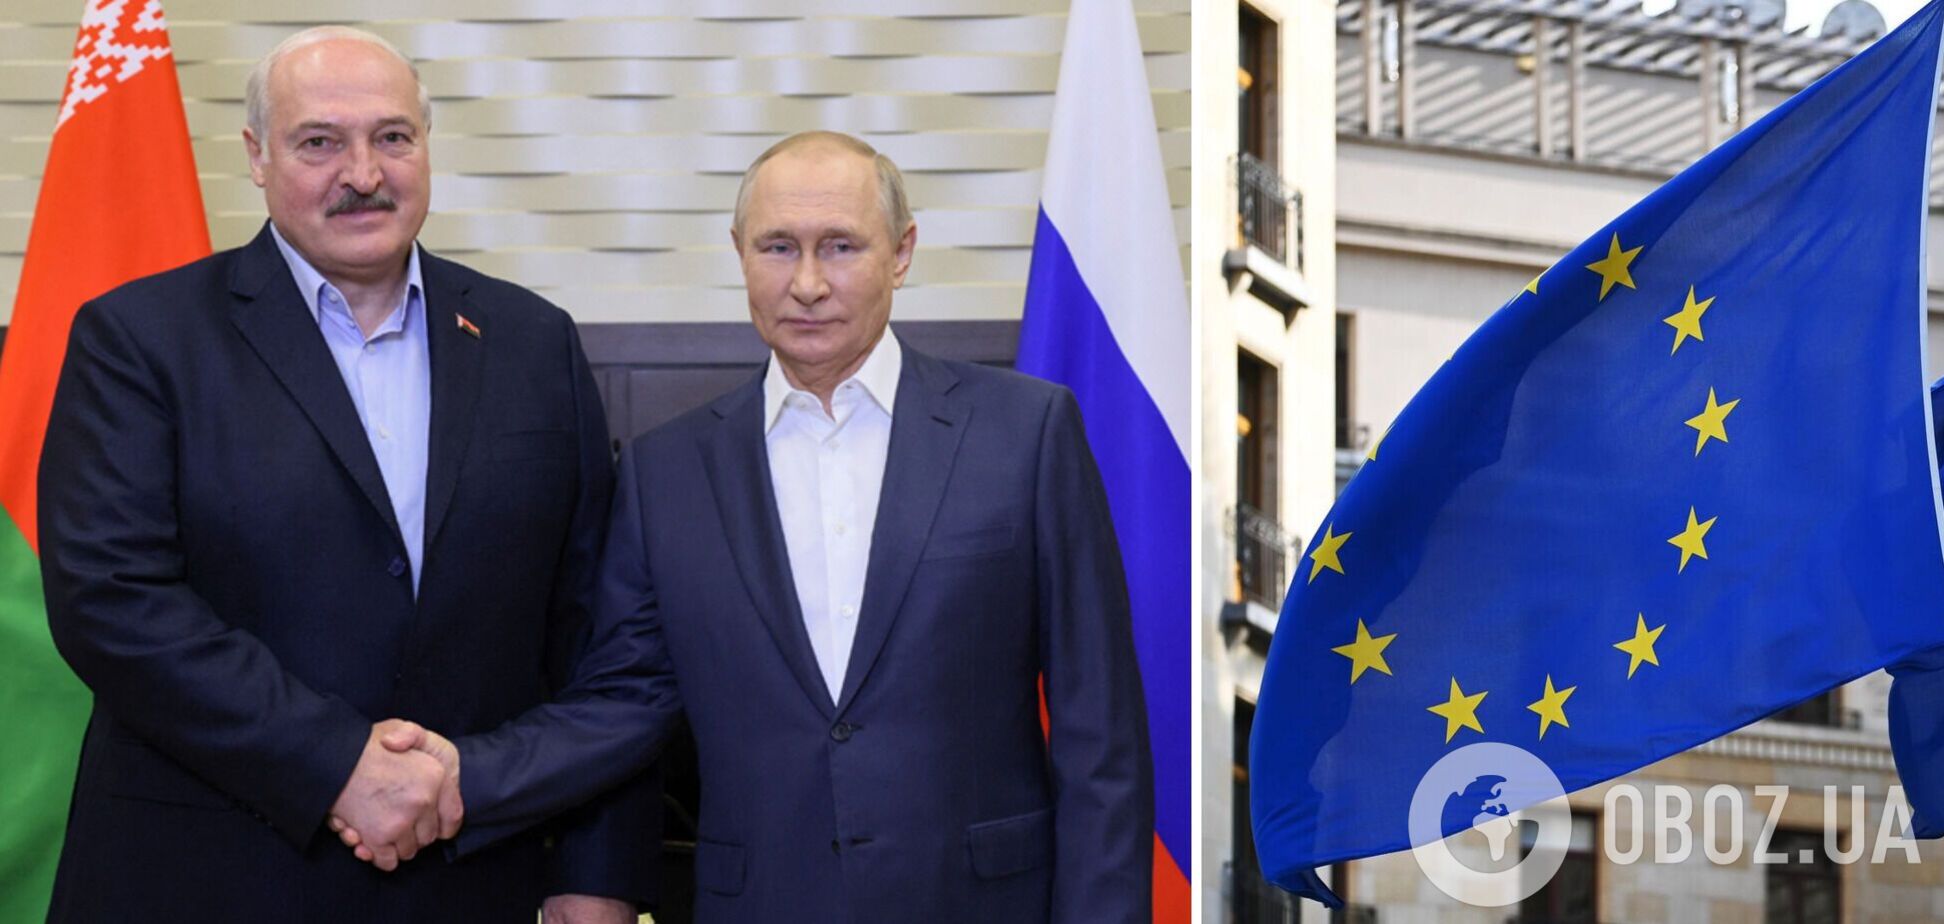 ЕС готовит новые санкции против России и Беларуси